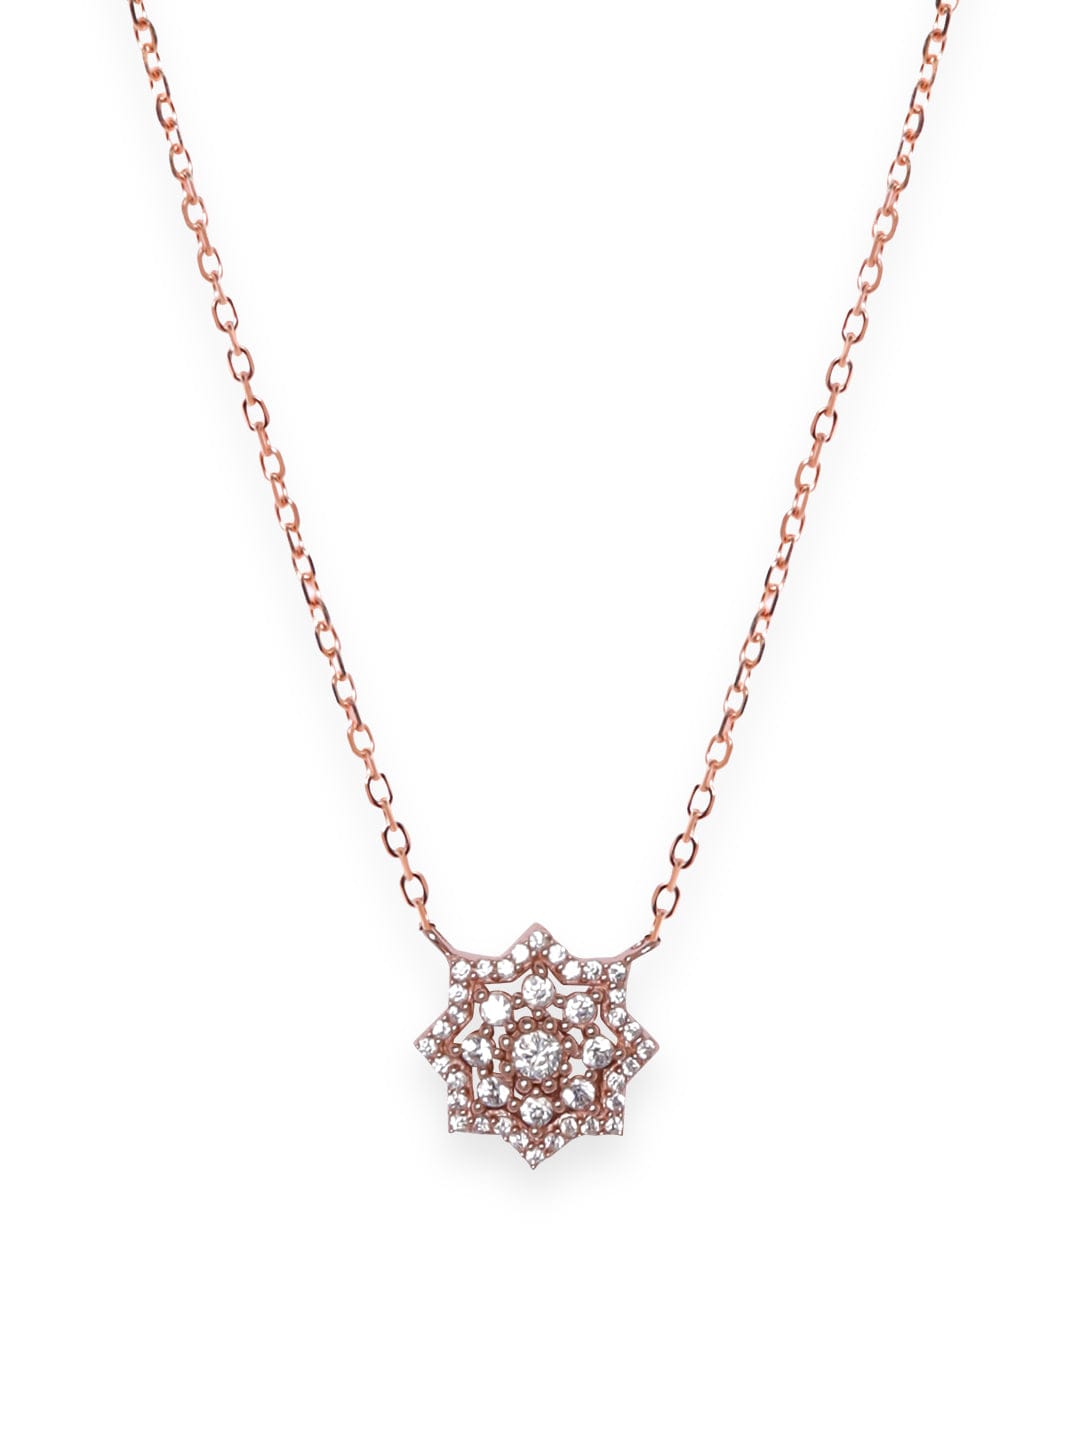 Rubans 925 Silver 18K Rose Gold Studded Flower Motif Pendant Minimal Necklace Necklaces, Necklace Sets, Chains & Mangalsutra